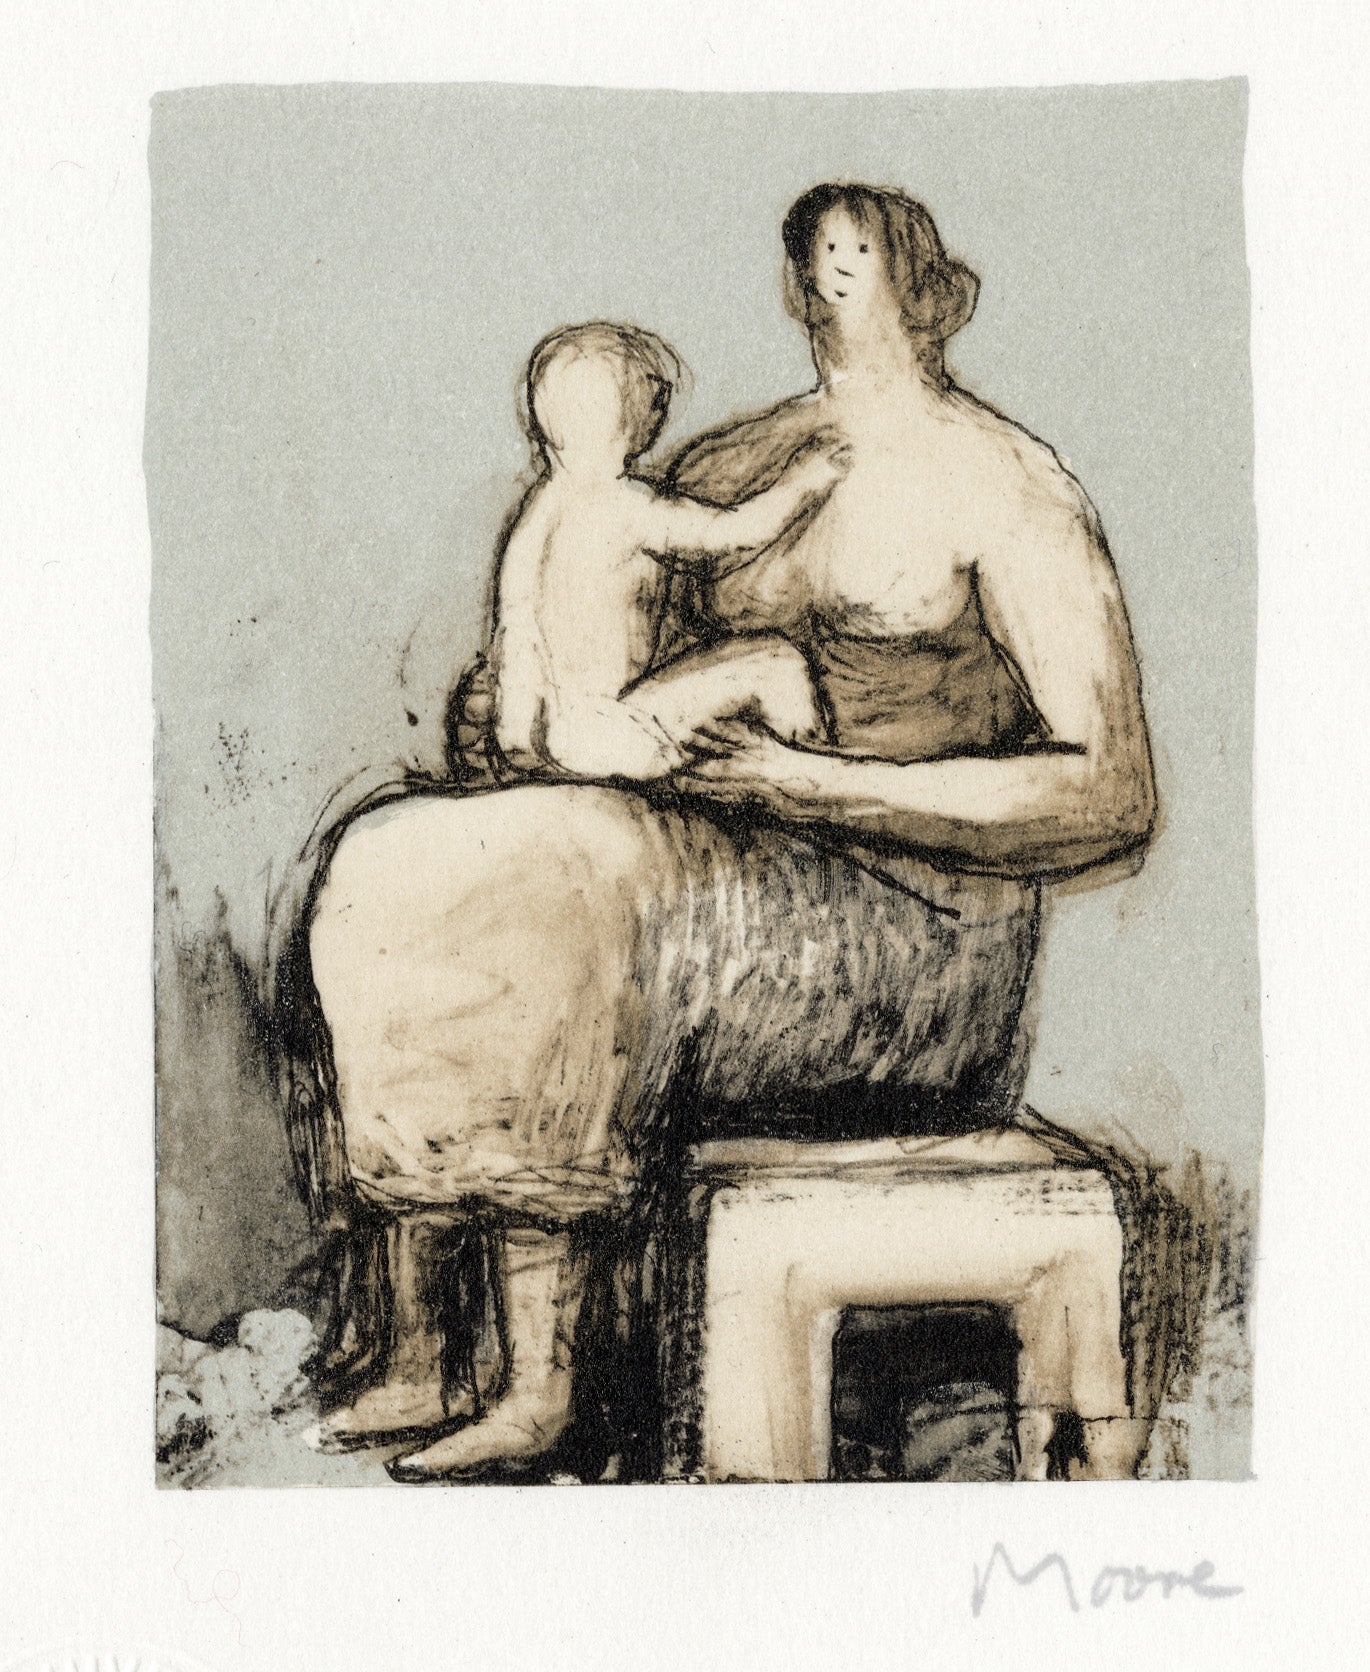 Henry Moore Exhibition of Original Prints